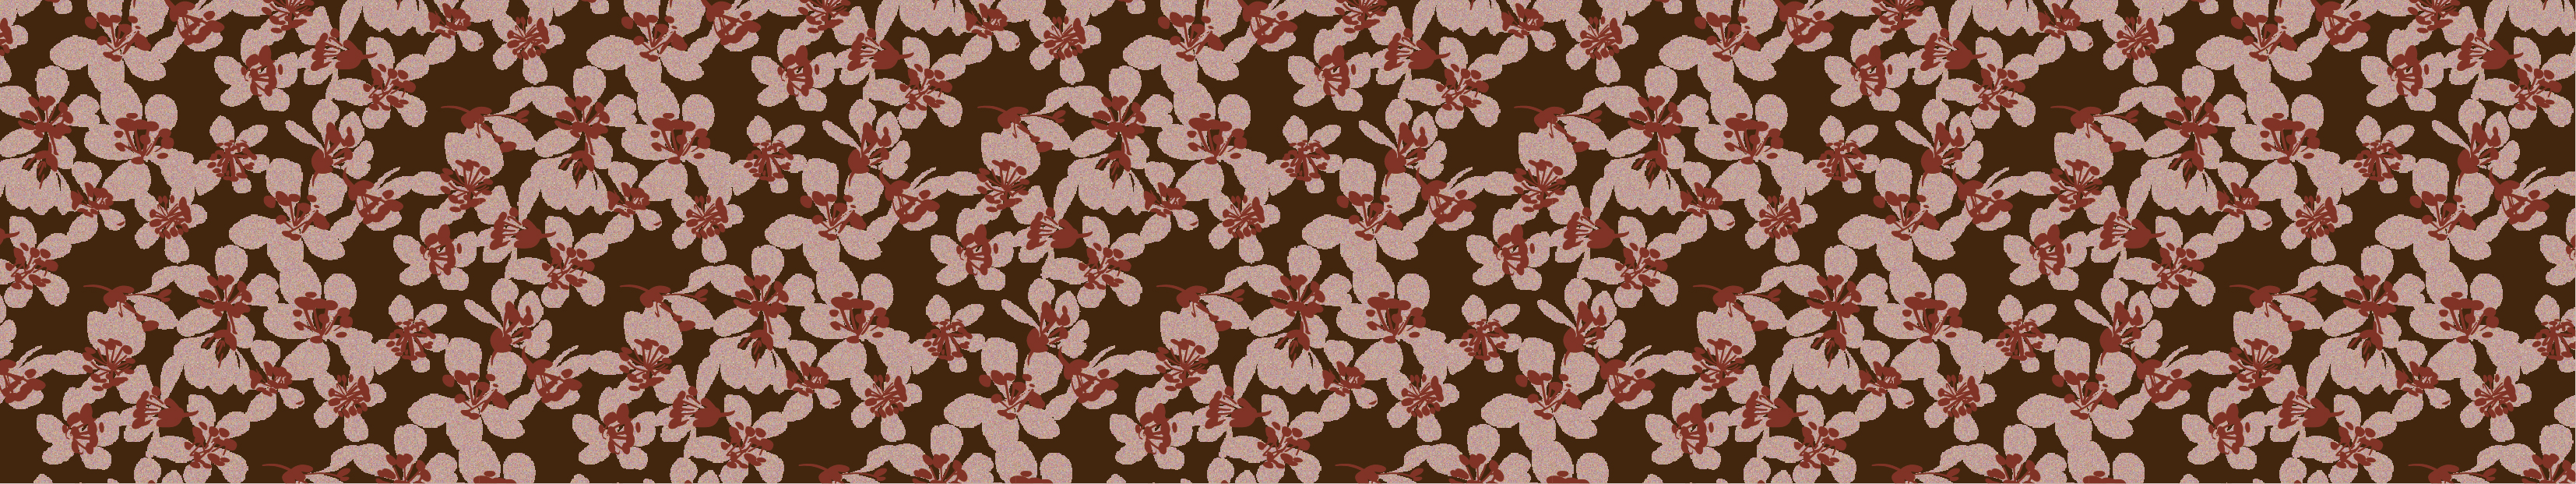 Cherry Blossoms - Transfer Sheets - 30 pcs